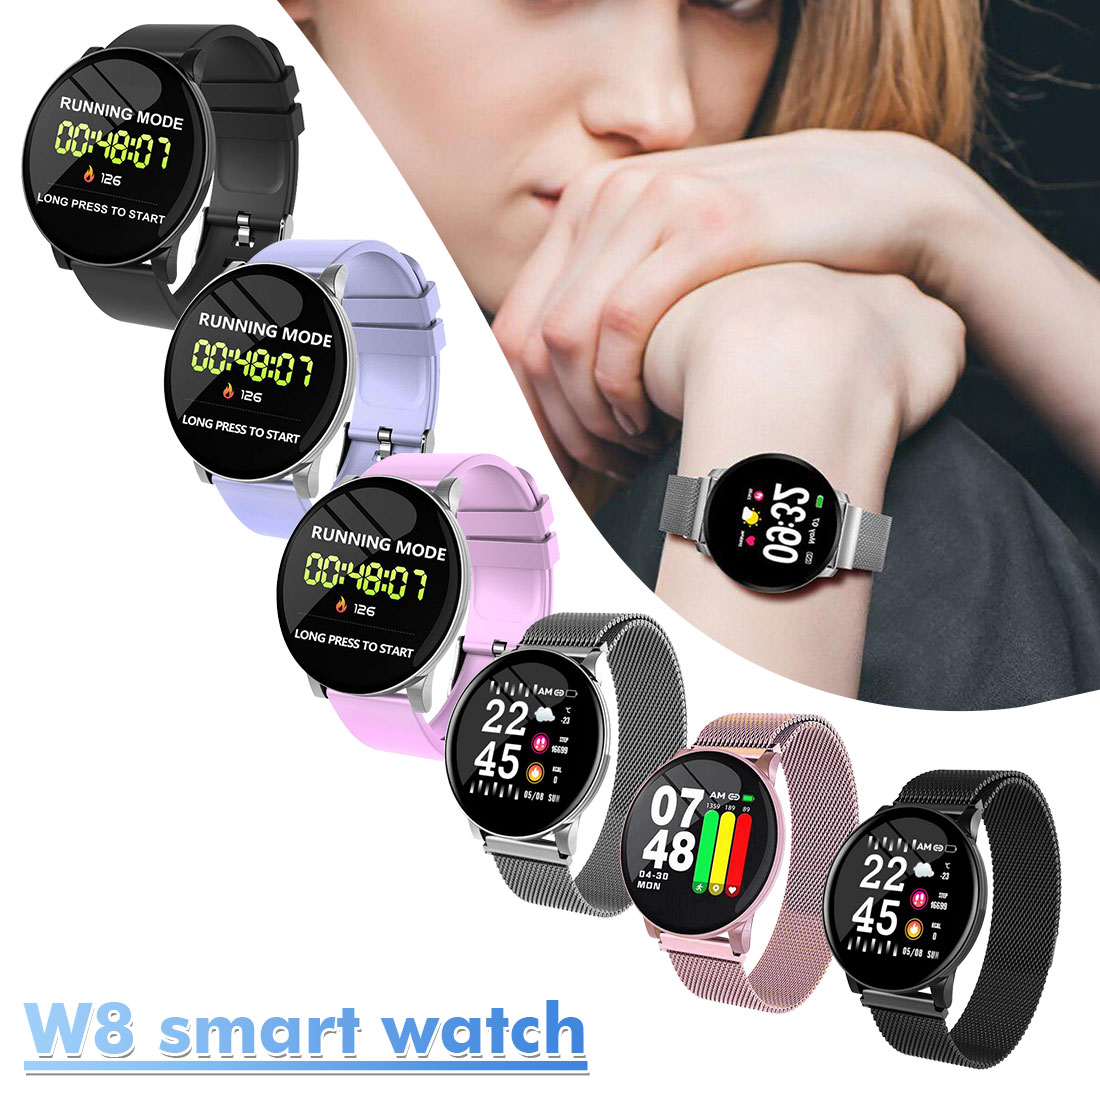 

Luxury Newest W8 Bluetooth Smart Watch stainless steel band Waterproof Sports Fitness Tracker Heart Rate Monitor Blood Pressure Men Women Smartwatch